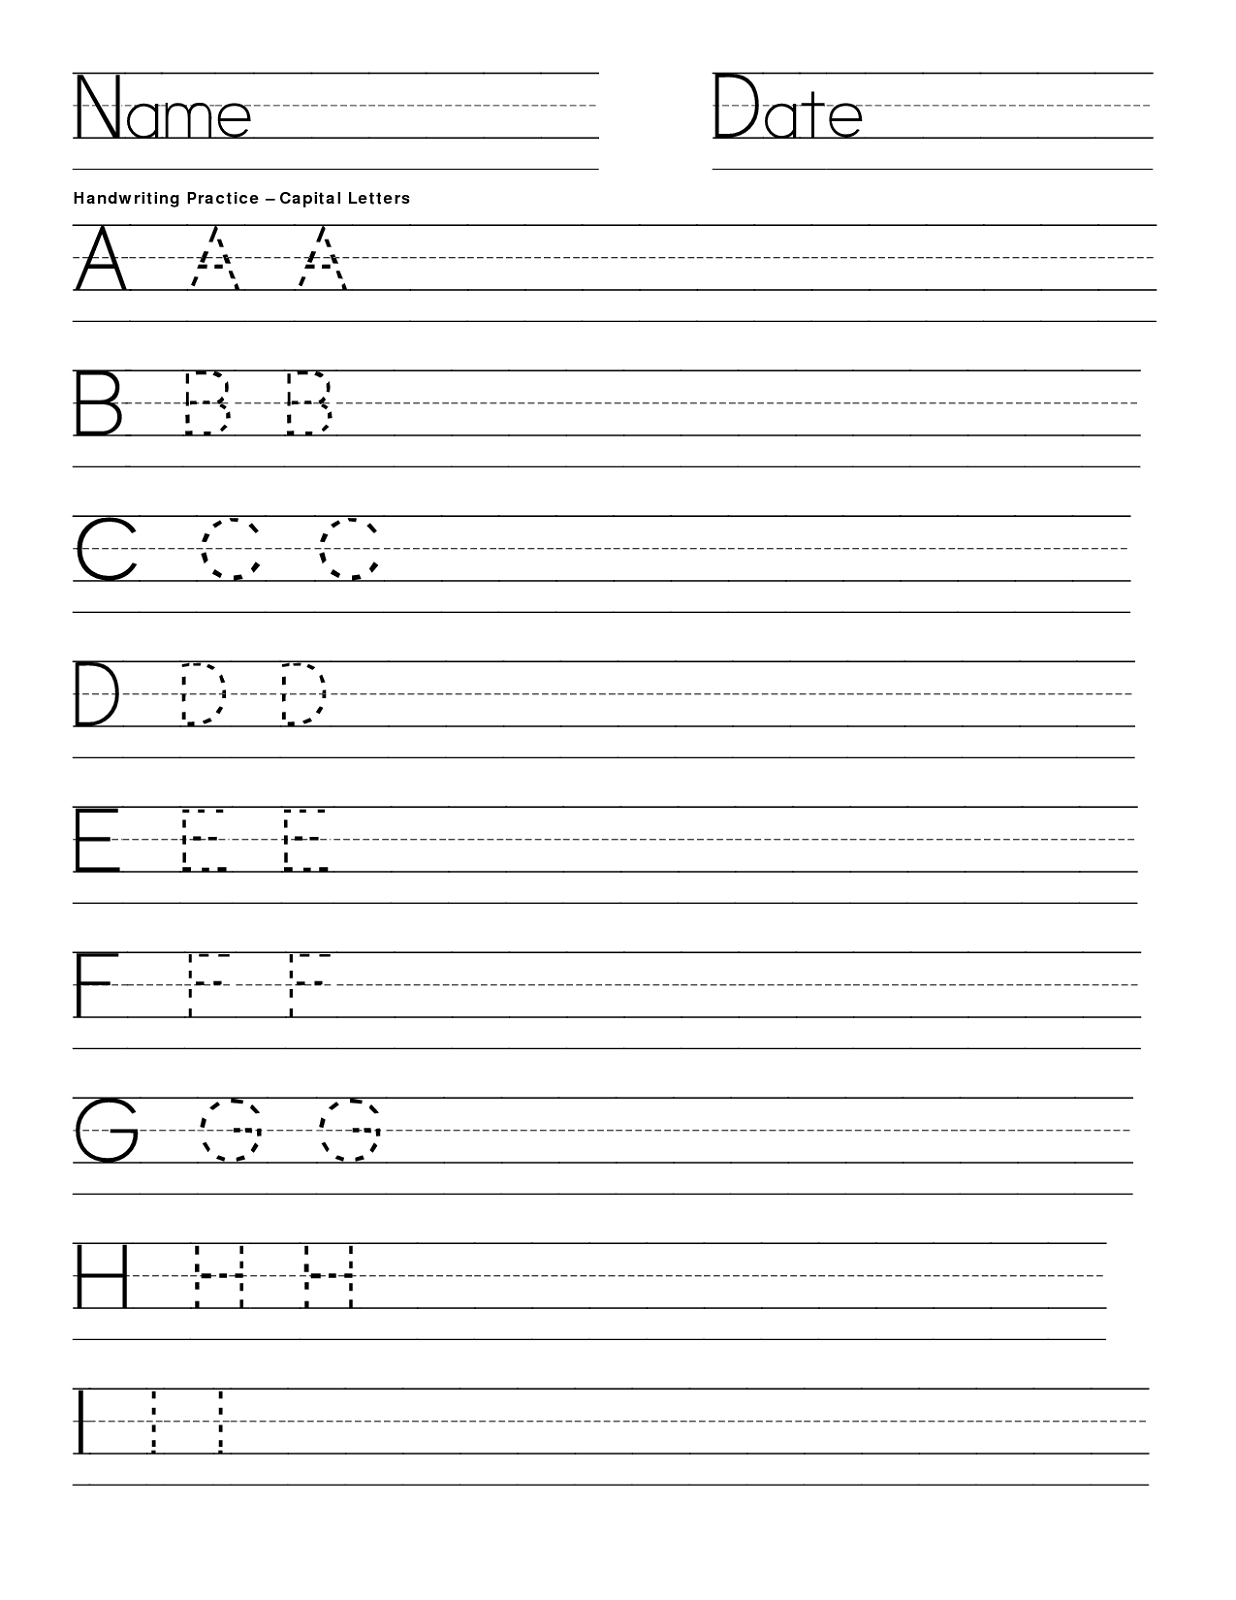 Free Handwriting Worksheets For Kids | Printable Alphabet Worksheet - Free Printable Practice Name Writing Sheets